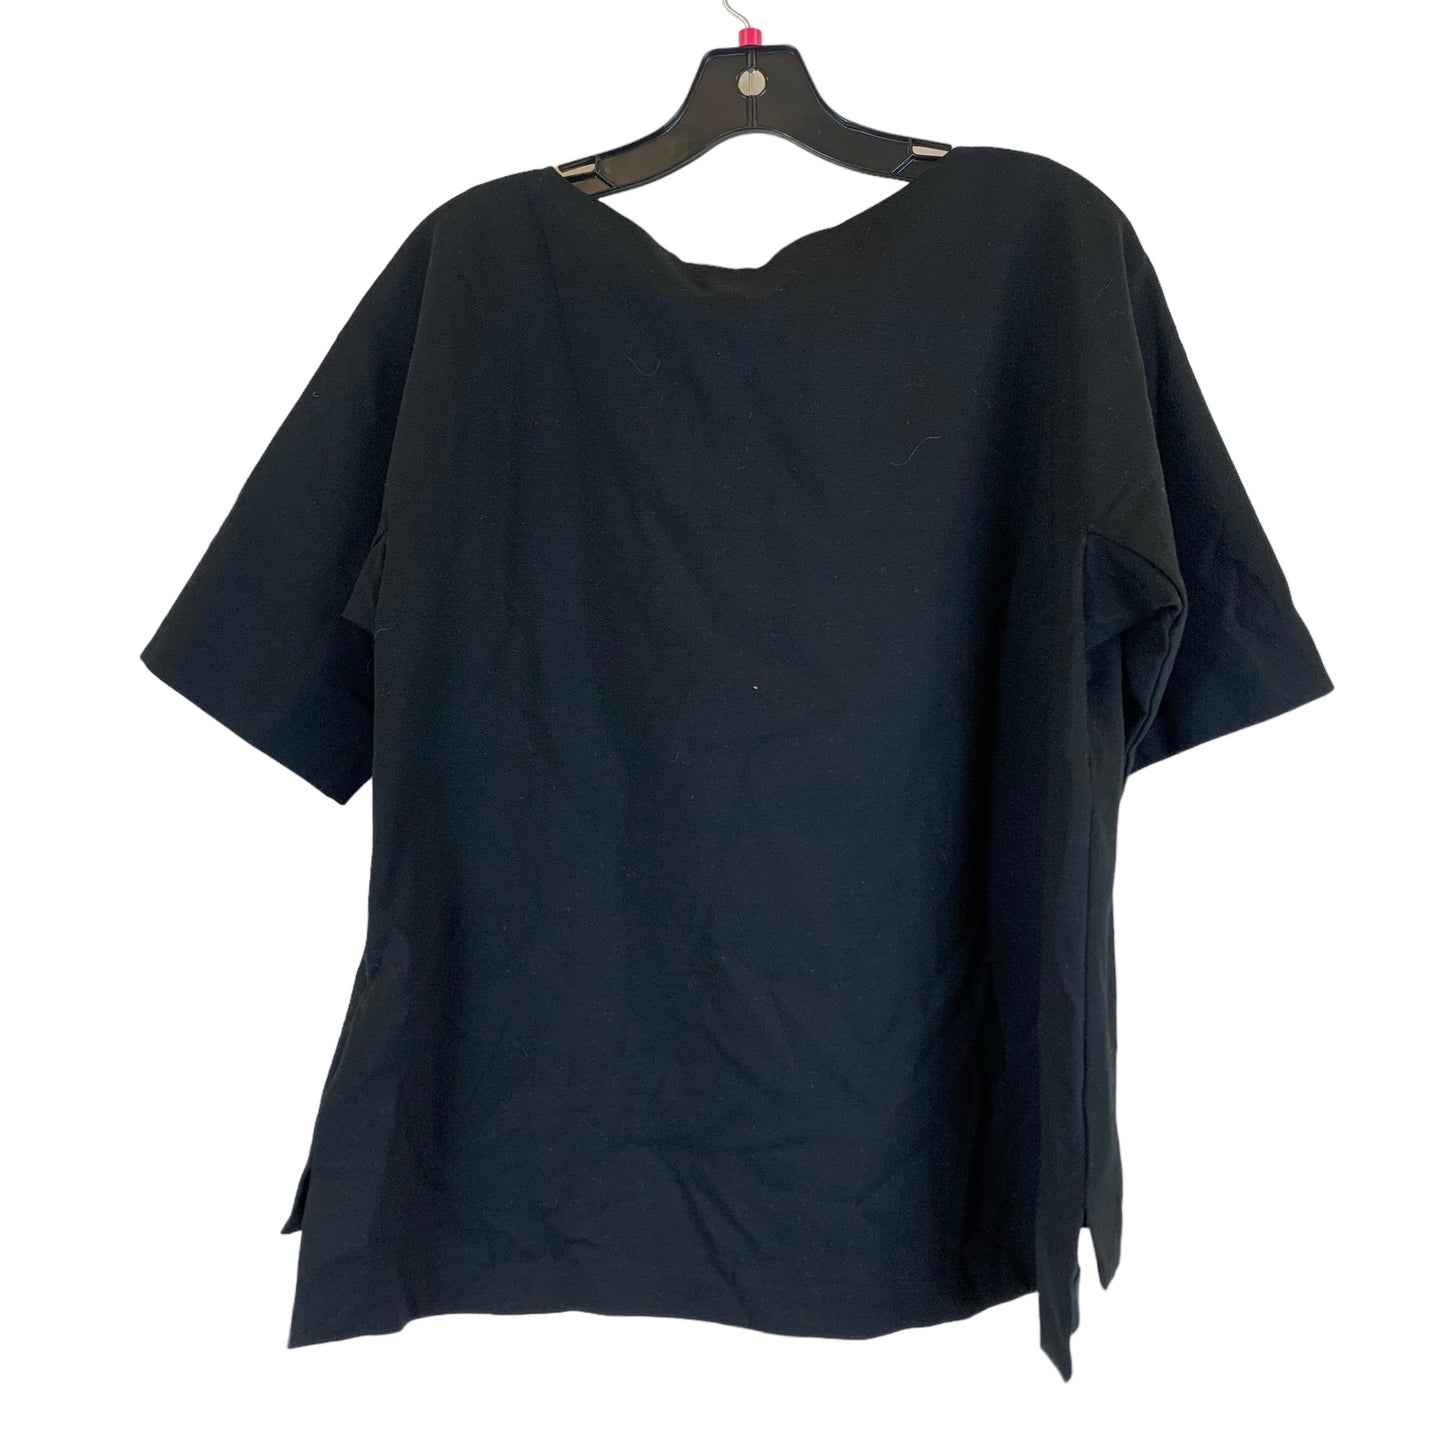 Black Top Short Sleeve Basic Eileen Fisher, Size M